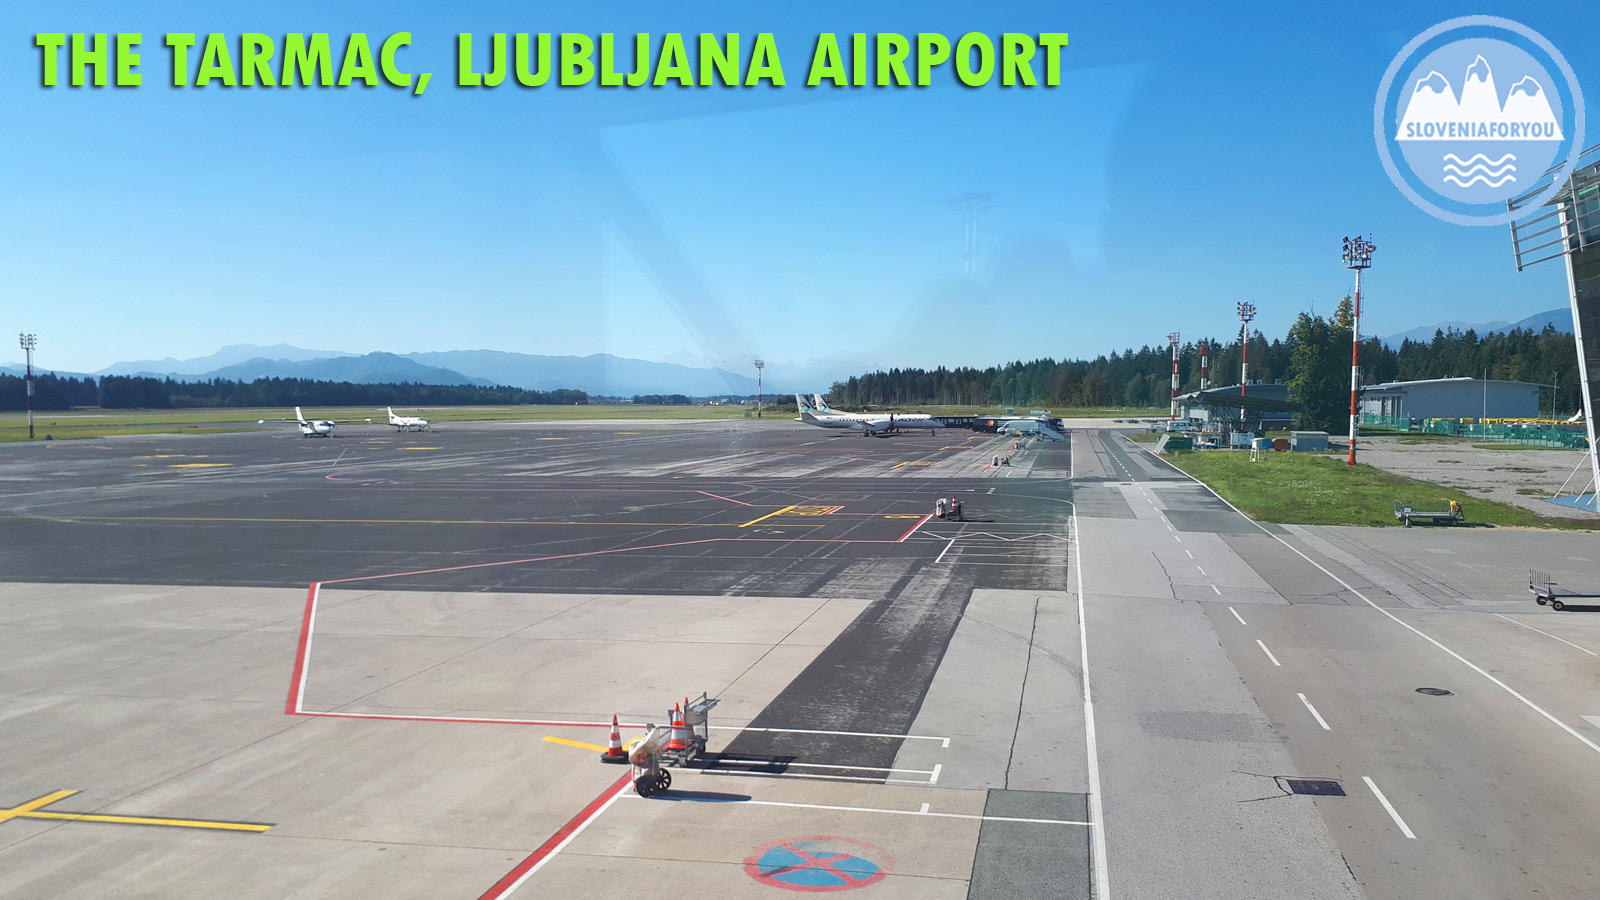 Tarmac at Ljubljana Airport, Sloveniaforyou